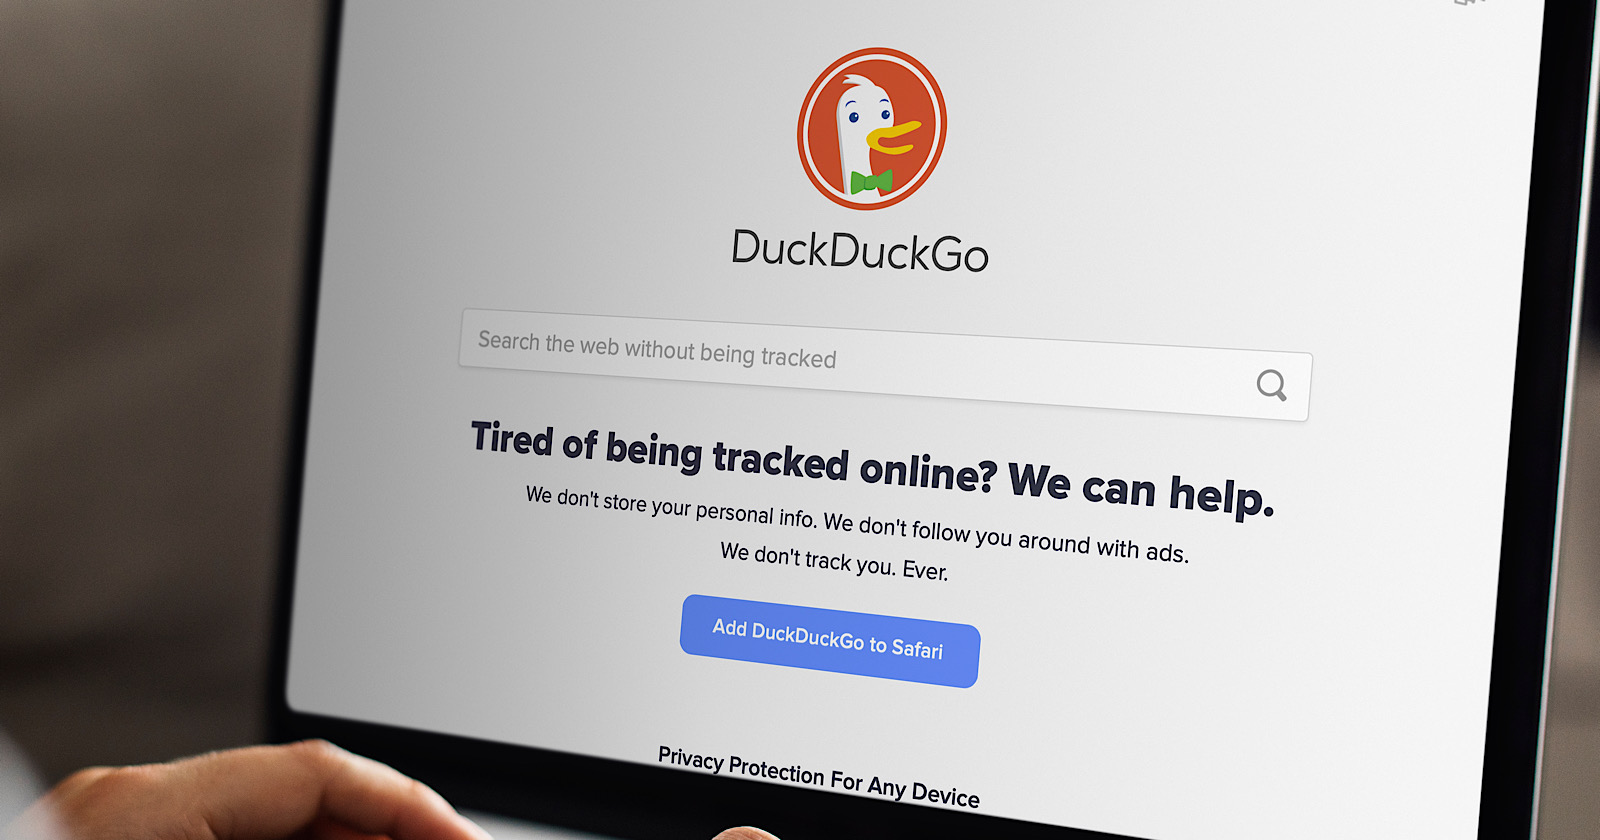 duckduckgo announces plans to block googles floc via sejournal mattgsouthern